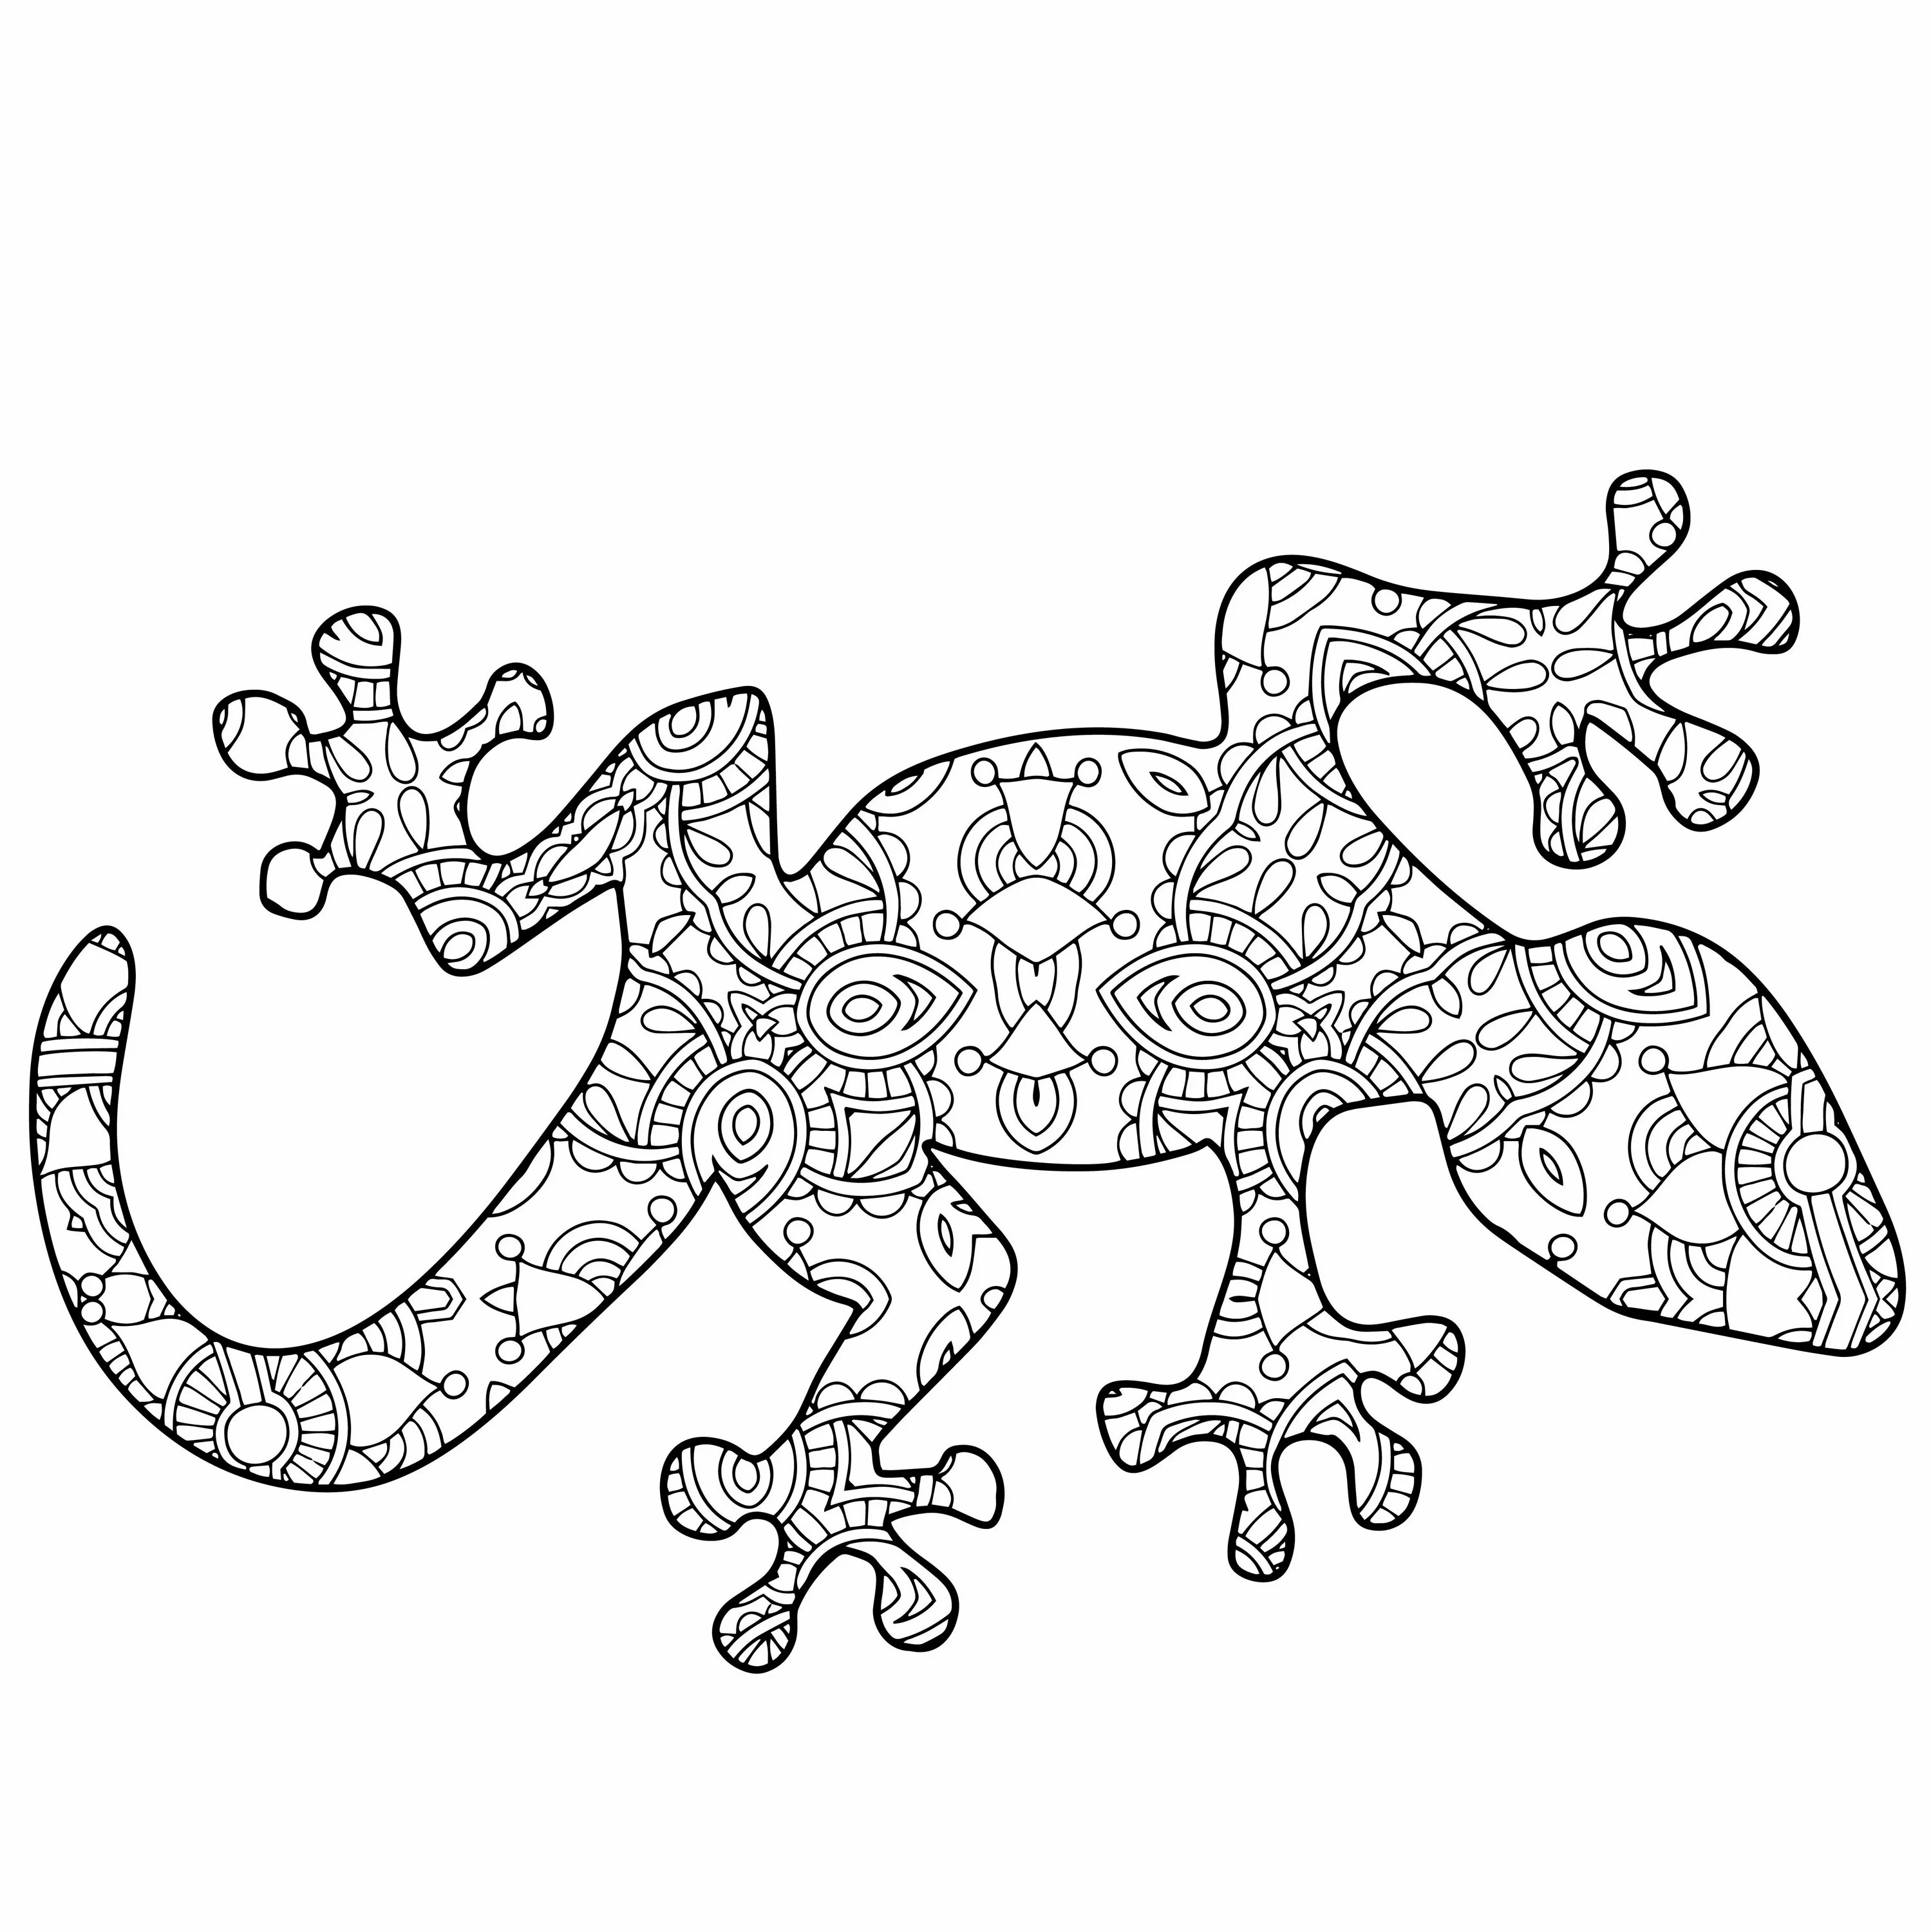 Cute lizard antistress coloring book